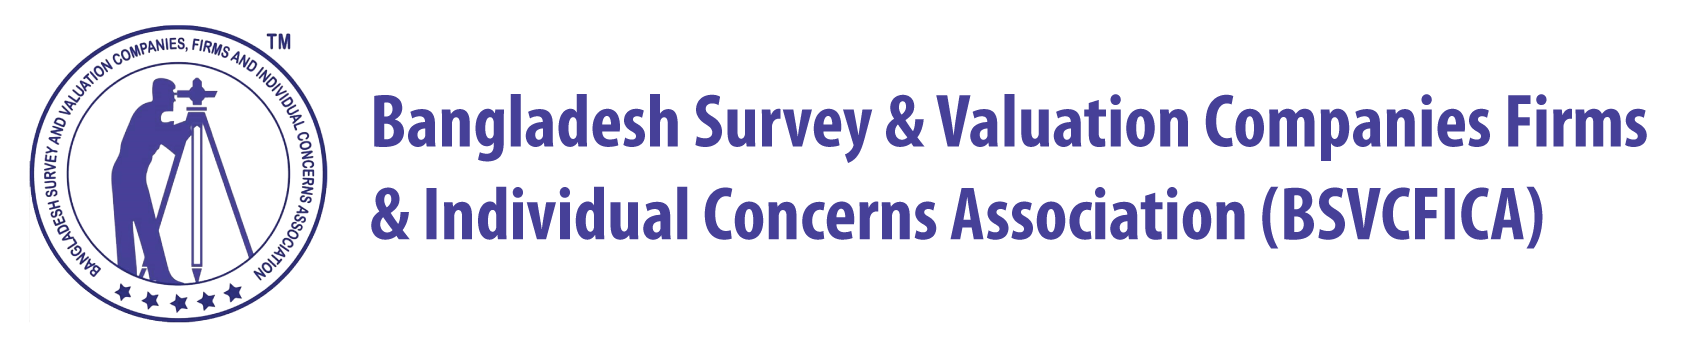 The Bangladesh Survey & Valuation Companies, Firms and Individual Concerns Association (BSVCFICA)